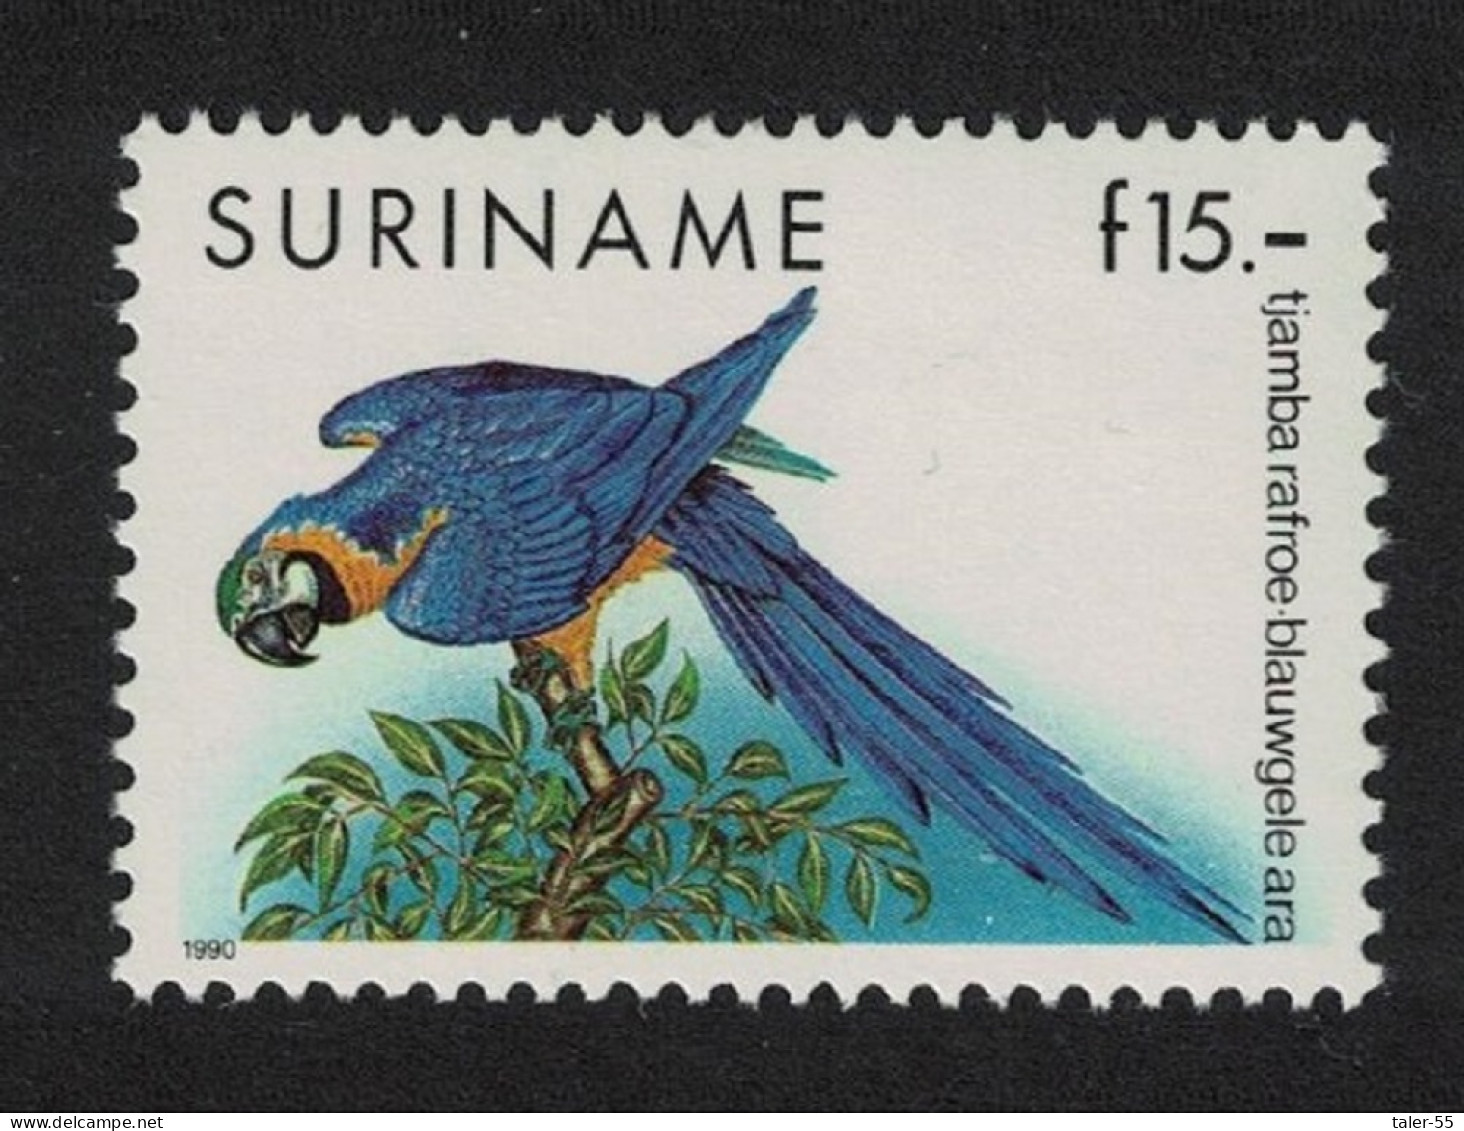 Suriname Blue And Yellow Macaw Bird F15.- 1991 MNH SG#1473 MI#1357 - Suriname